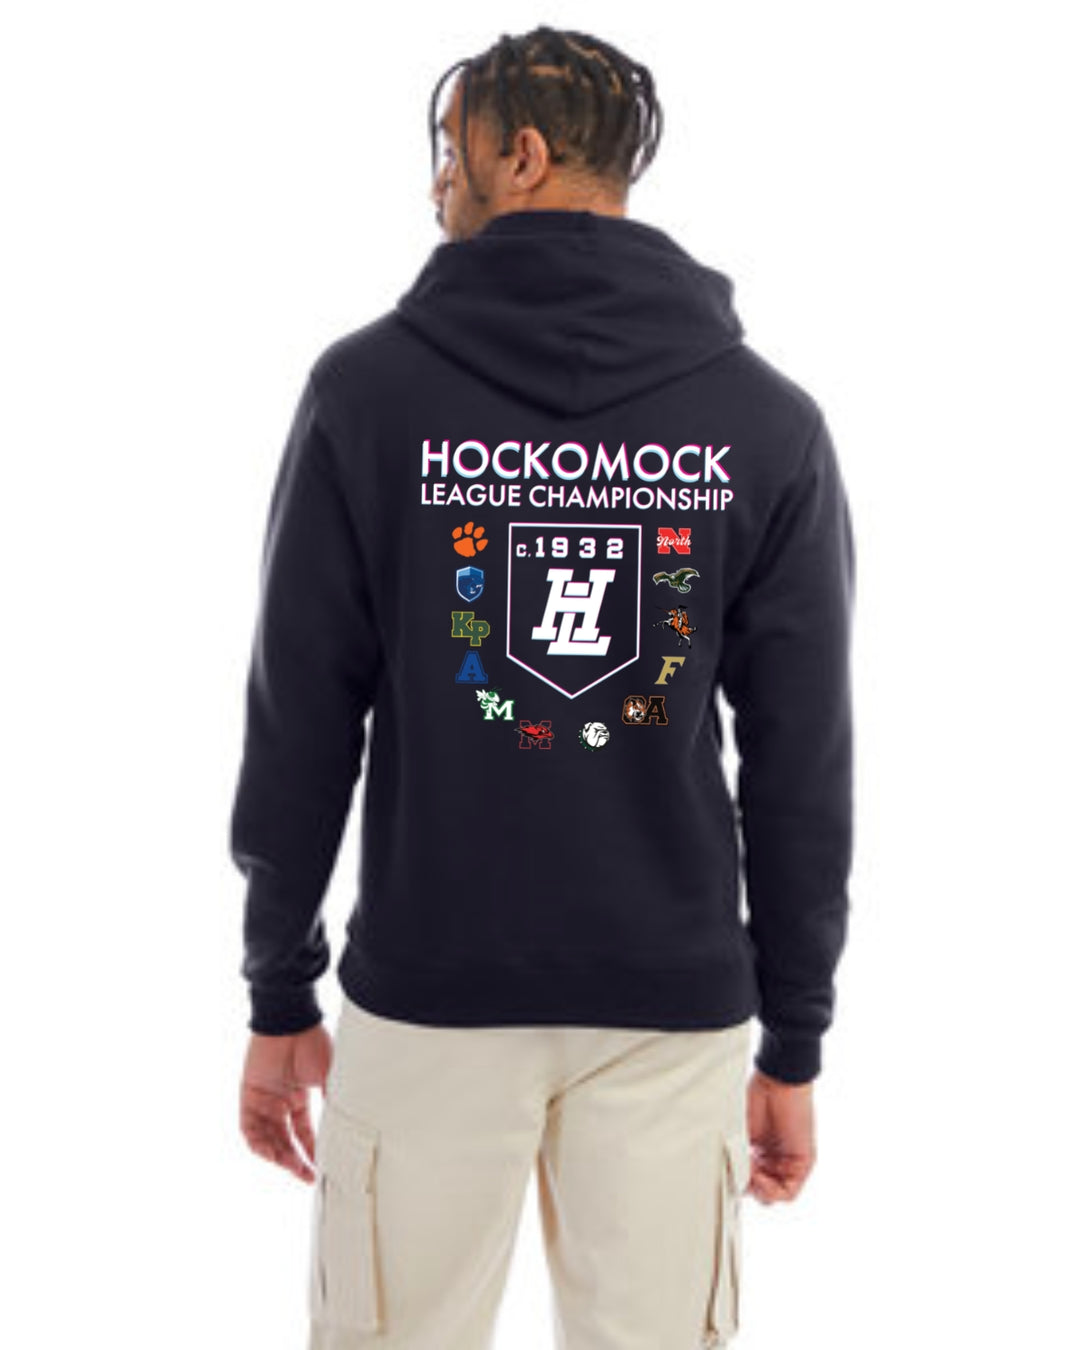 Hockomock League Championship Unisex Pullover Hooded Sweatshirt (S700)